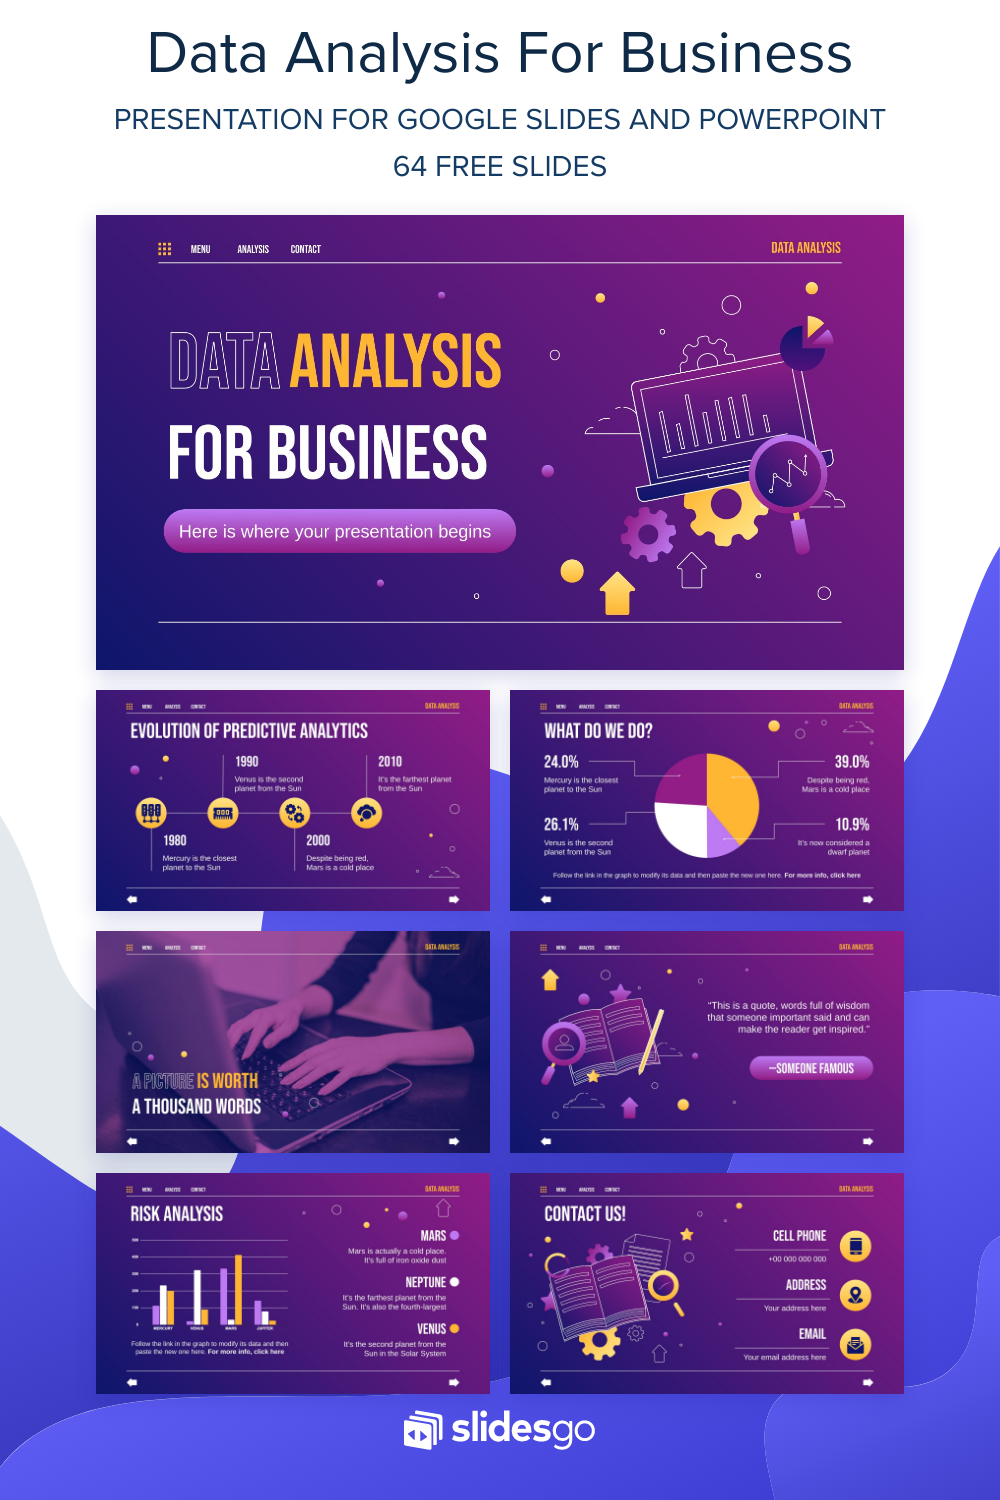 Screenshot of Data Analysis For Business Presentation by slidesgo